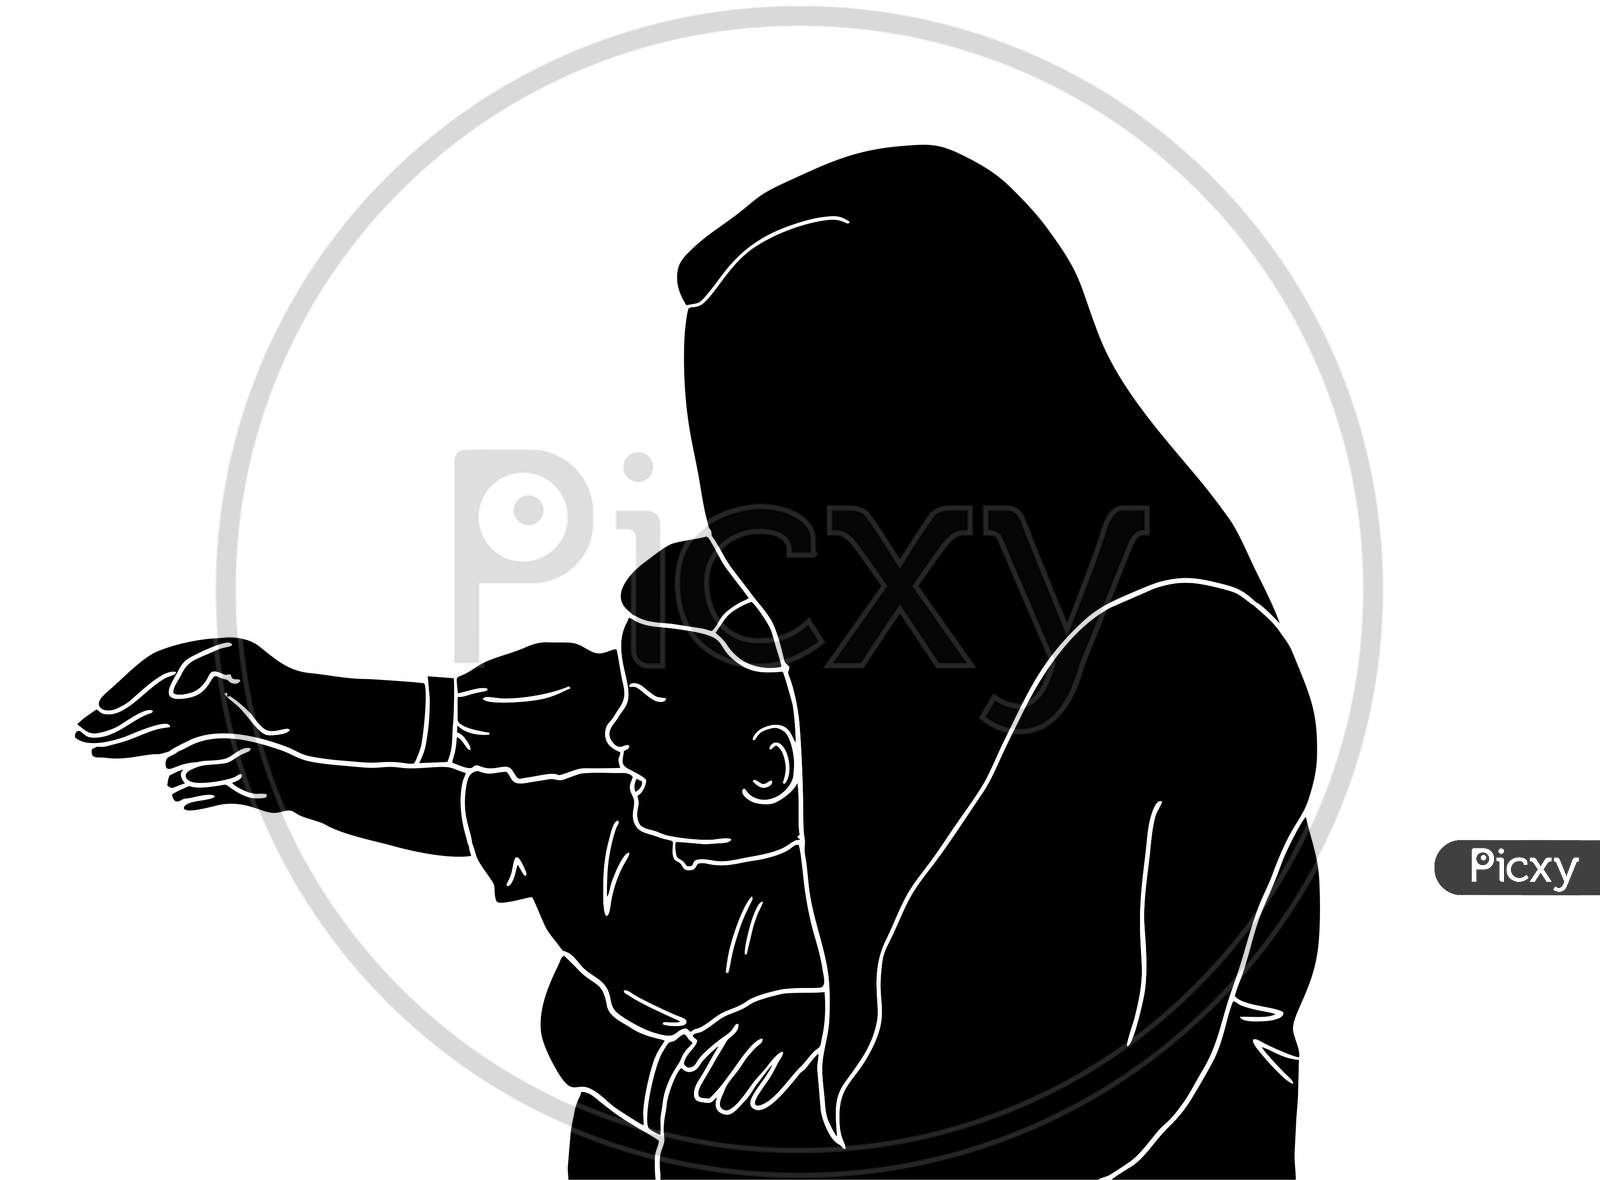 Mother Child Bonding Illustration On Single Color Isolated Background